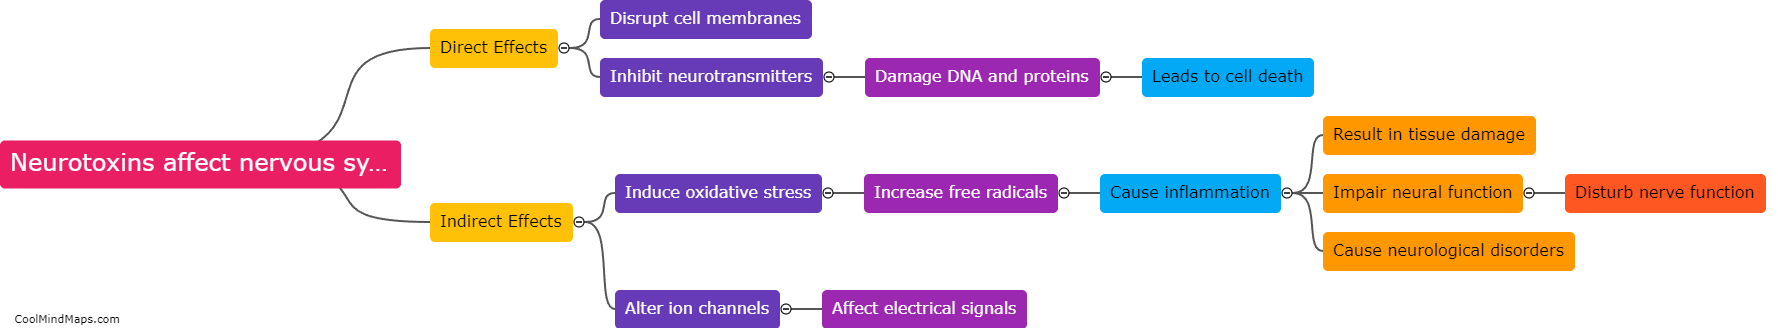 How do neurotoxins affect the nervous system?